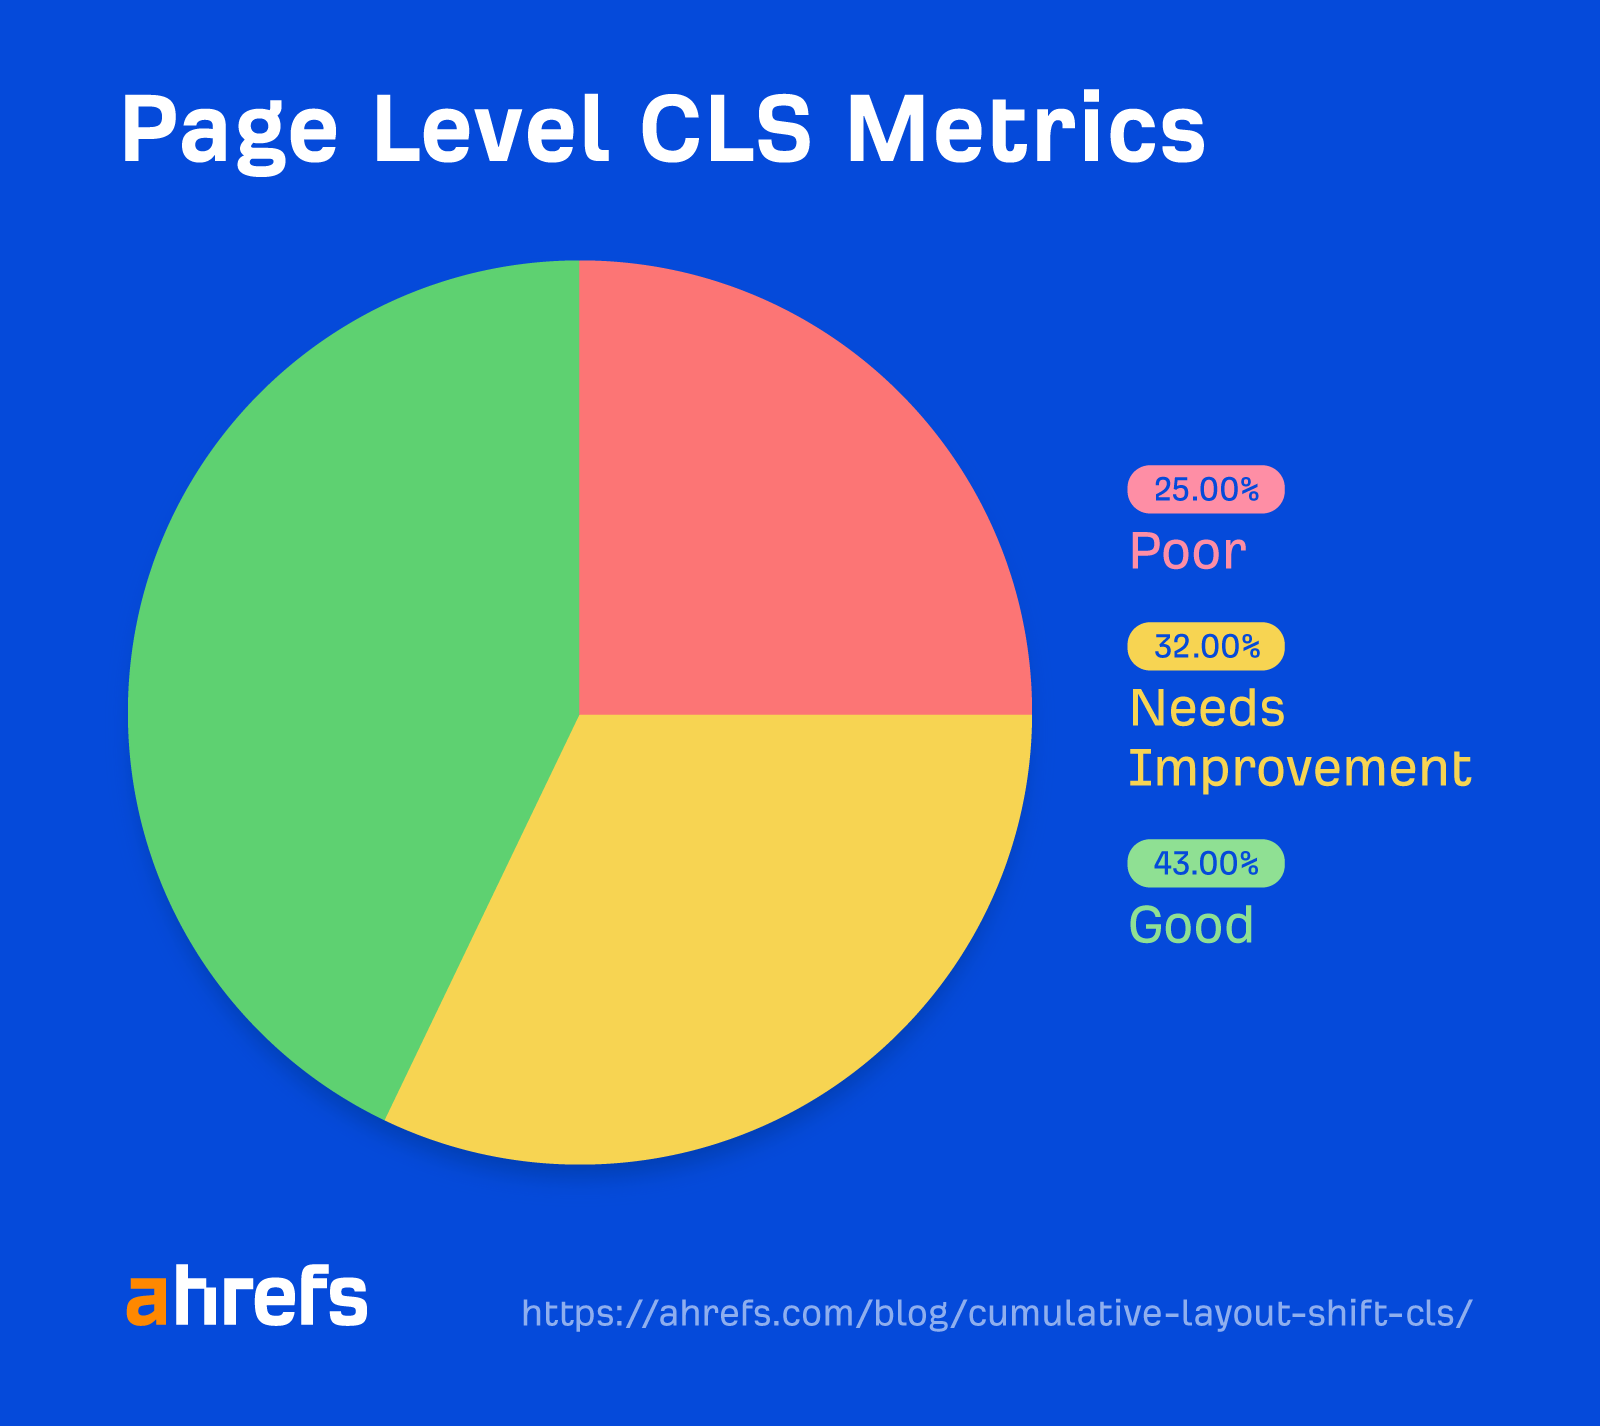 Core Web Vitals metric breakdown at the page level instead of origin level
